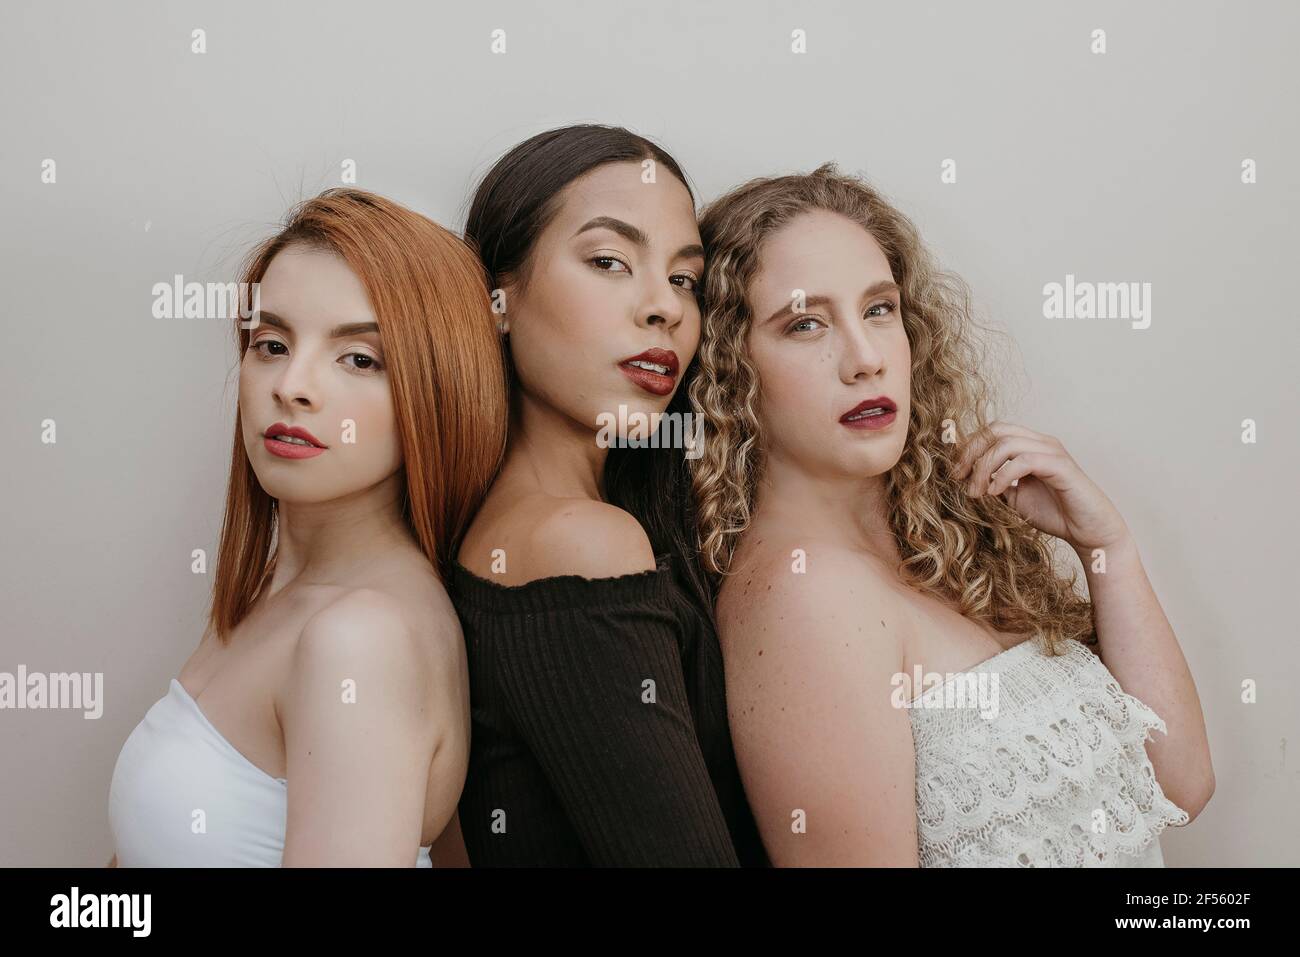 Multi ethnic female friends in casuals Stock Photo